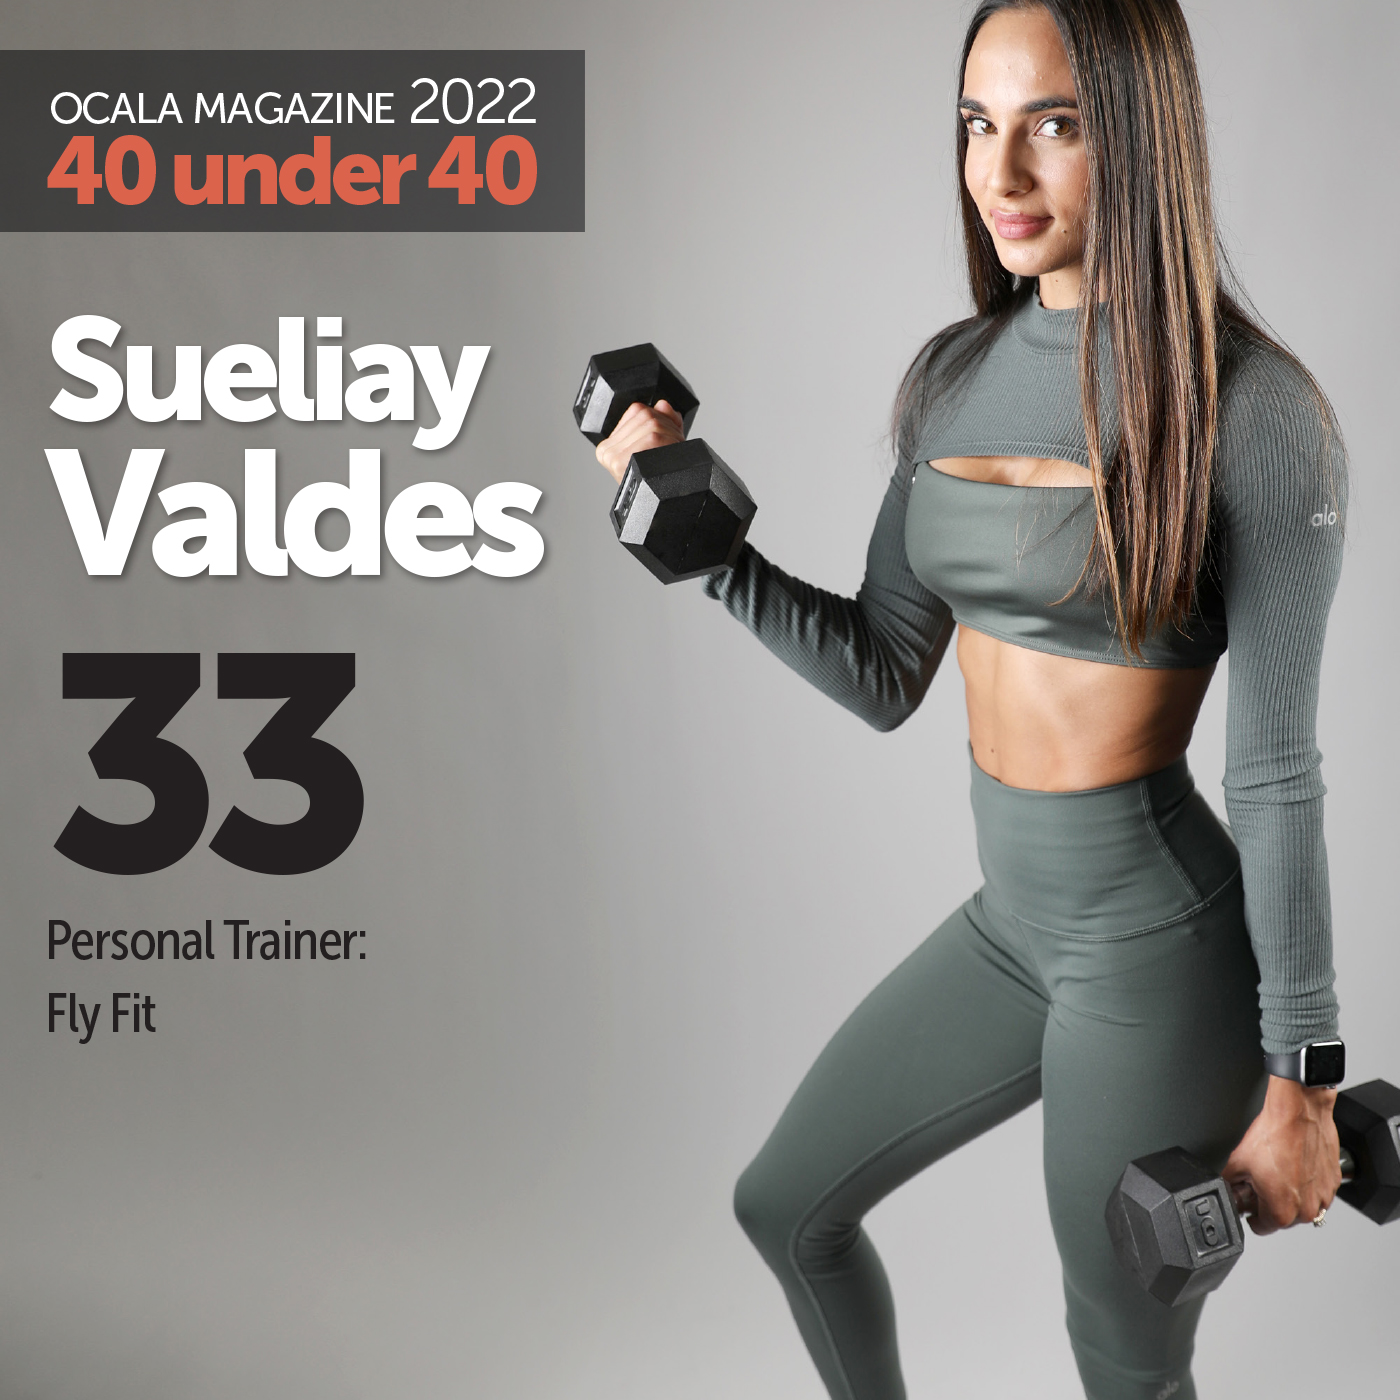 Sueliay Valdes Ocala Magazine 2022 40 under 40